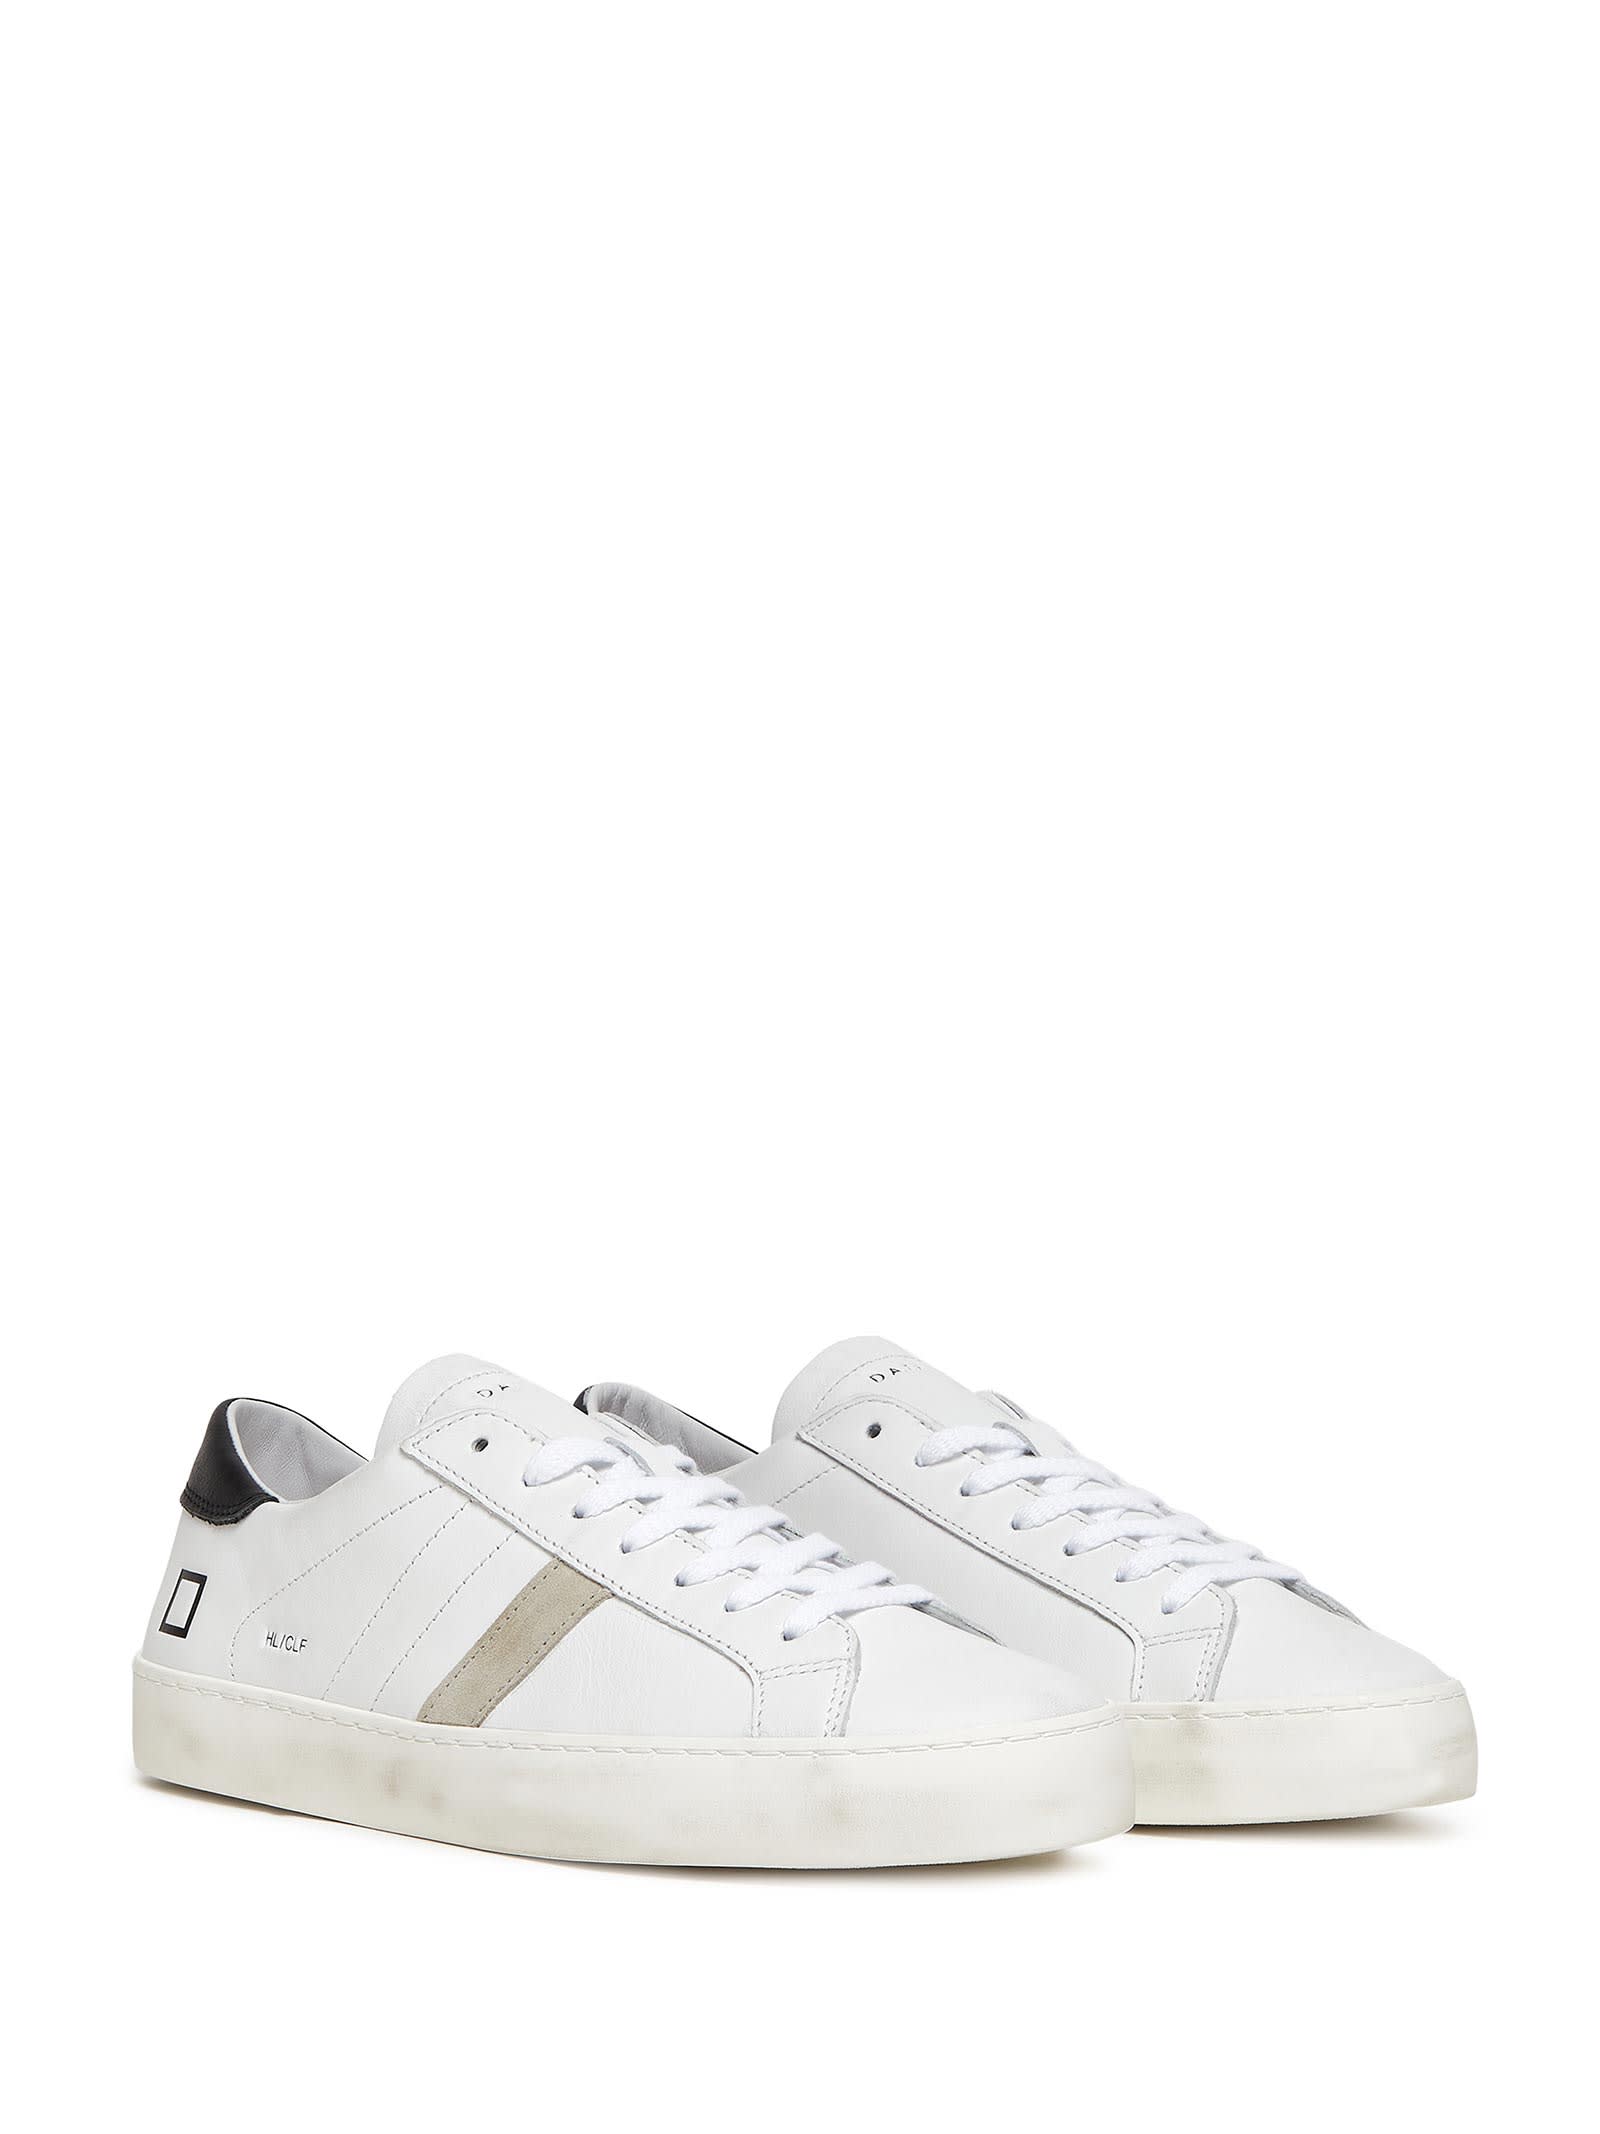 Shop Date Hill Low Sneaker In Leather In White Black